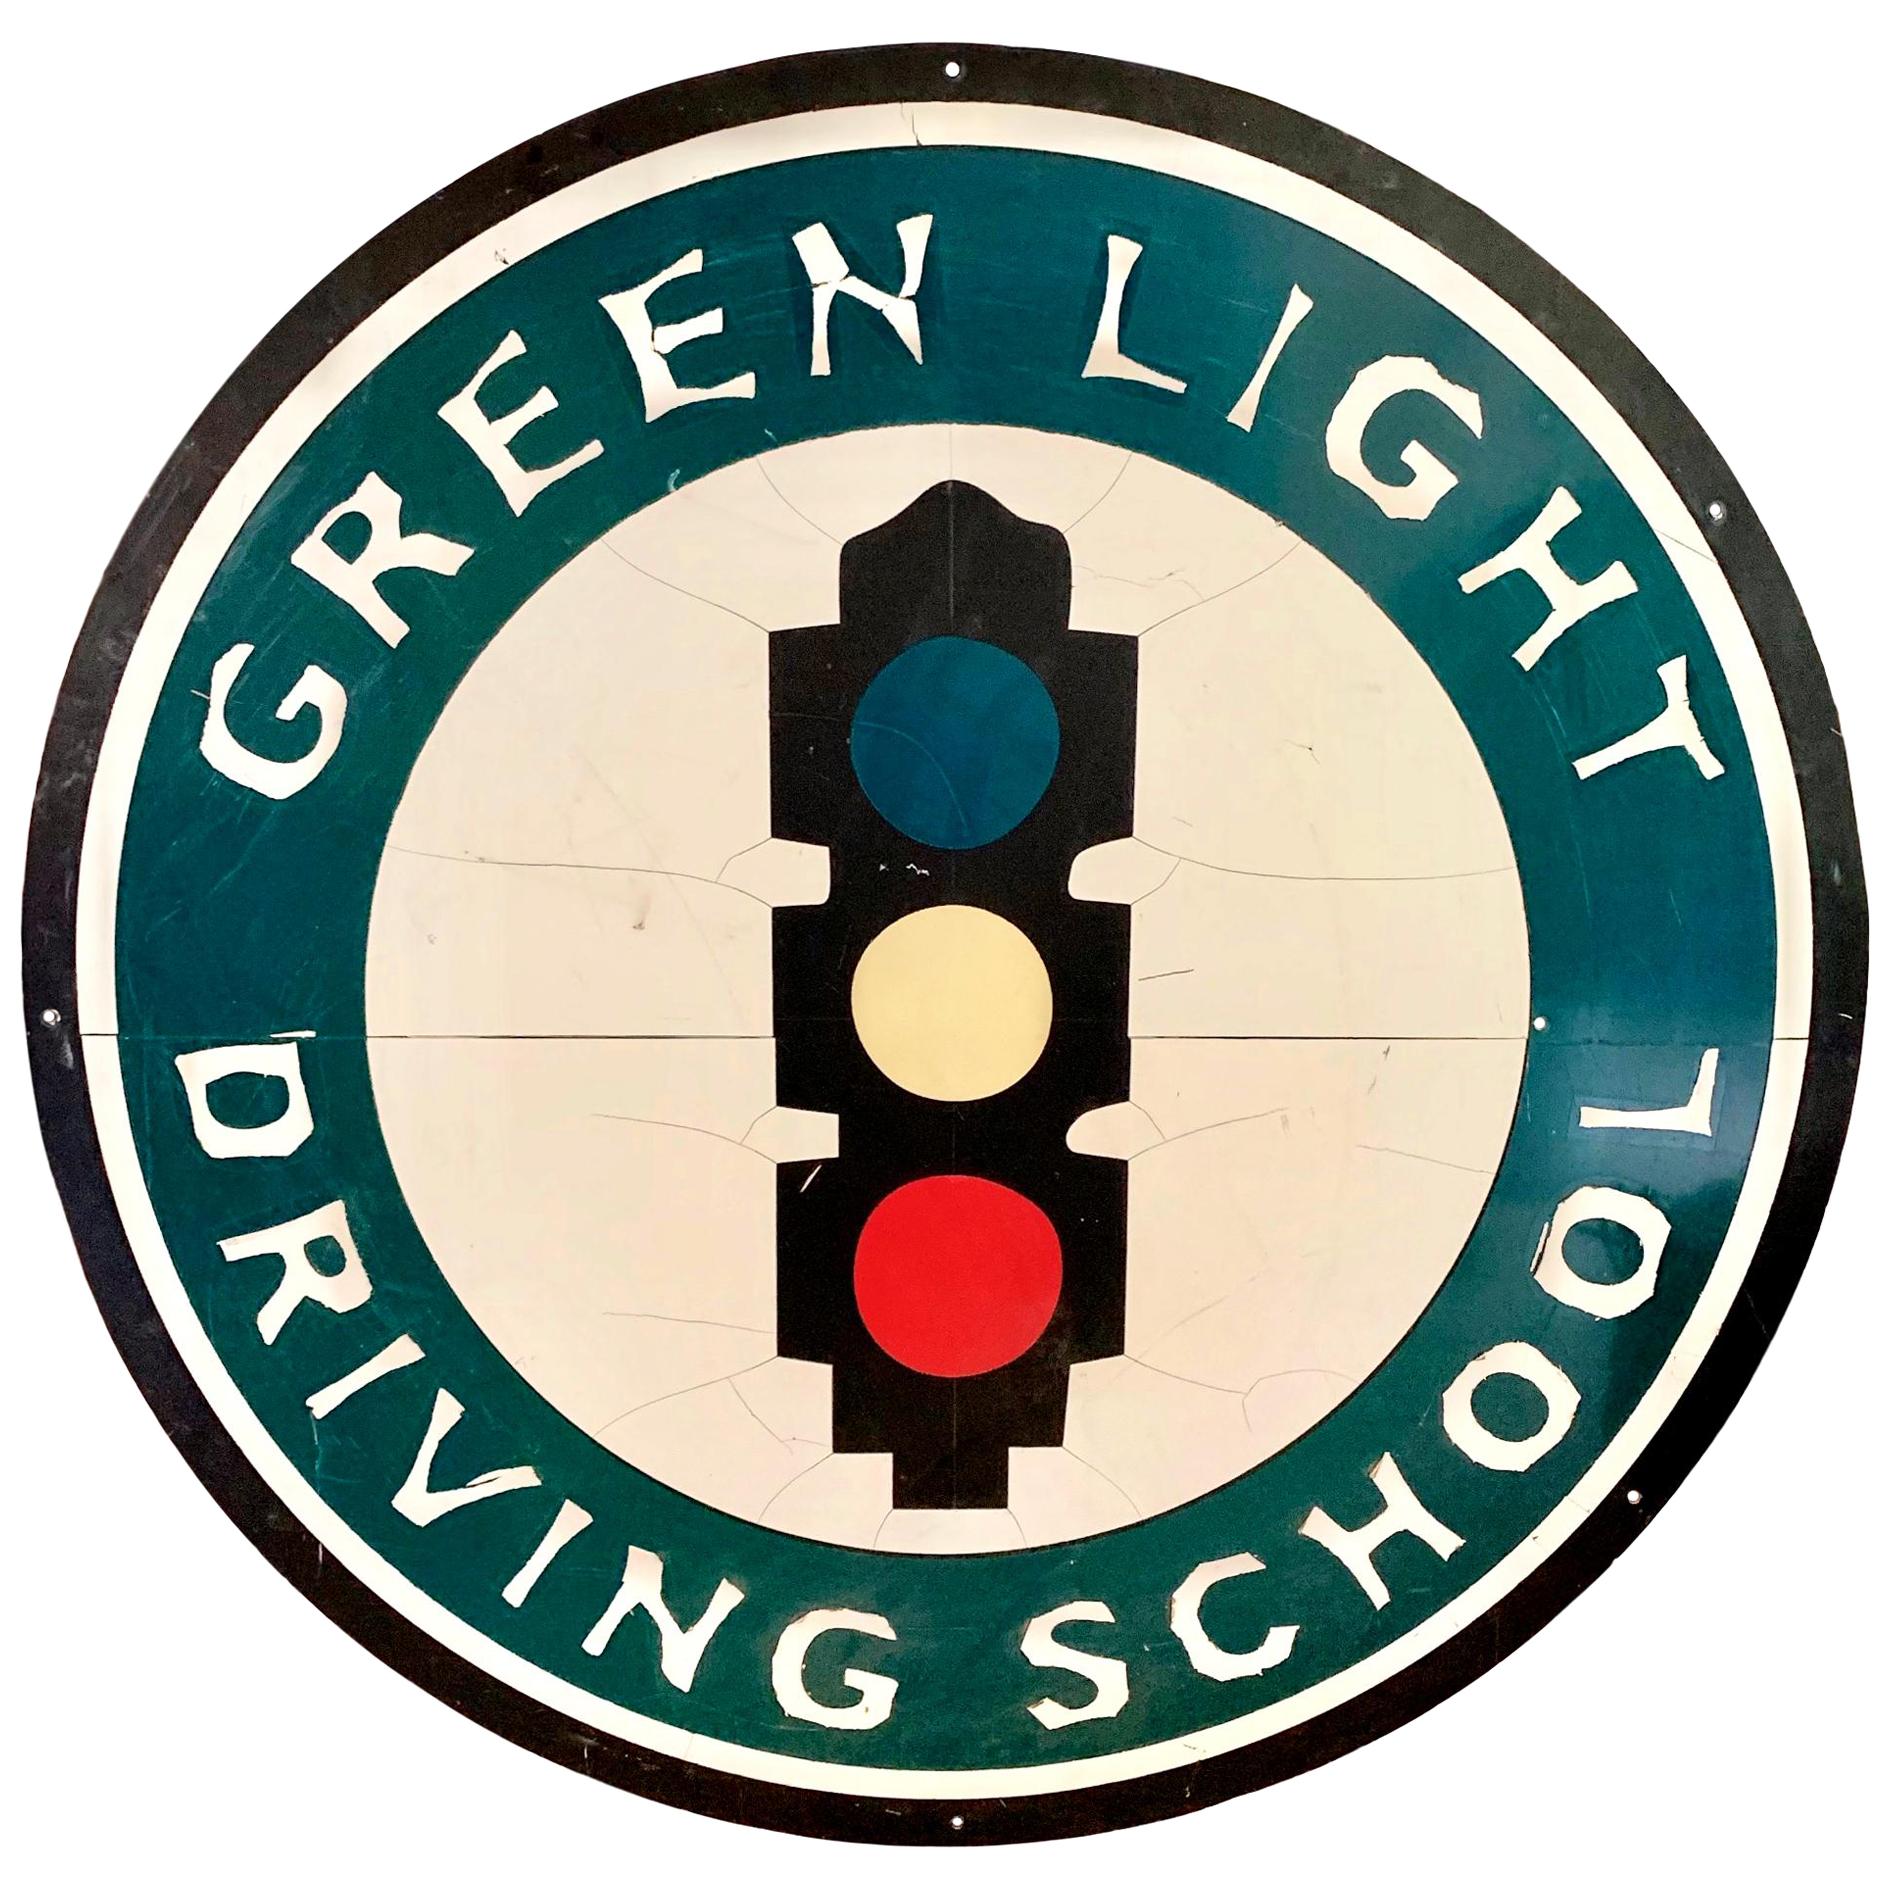 Massive Driving School Vintage Sign